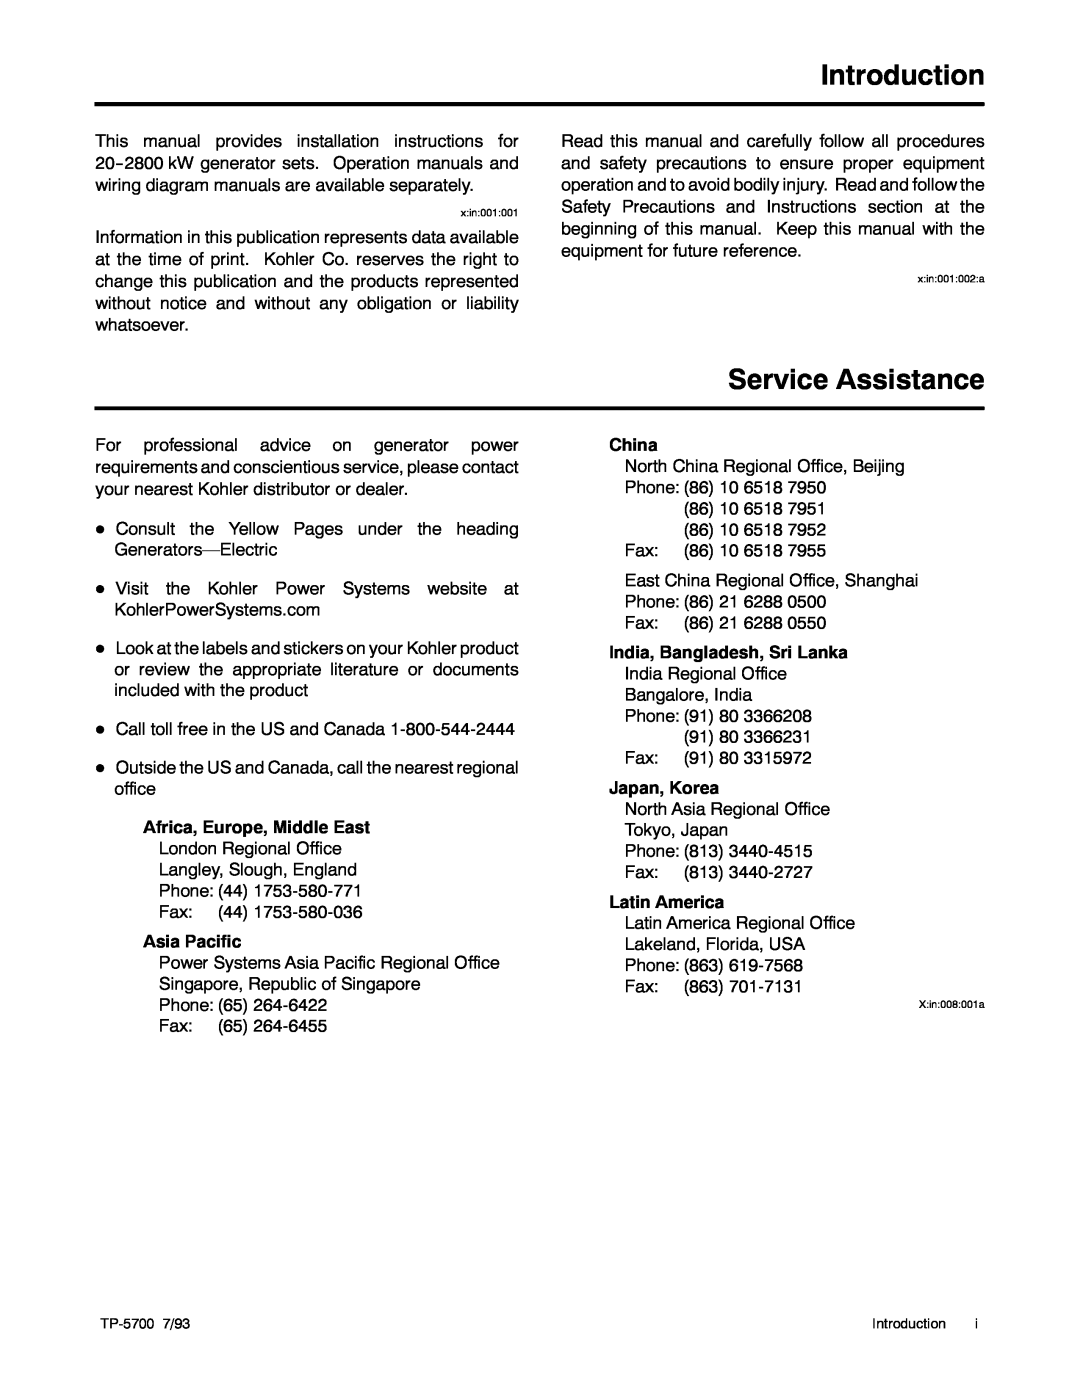 Kohler 20--2800 kW manual Introduction, Service Assistance 